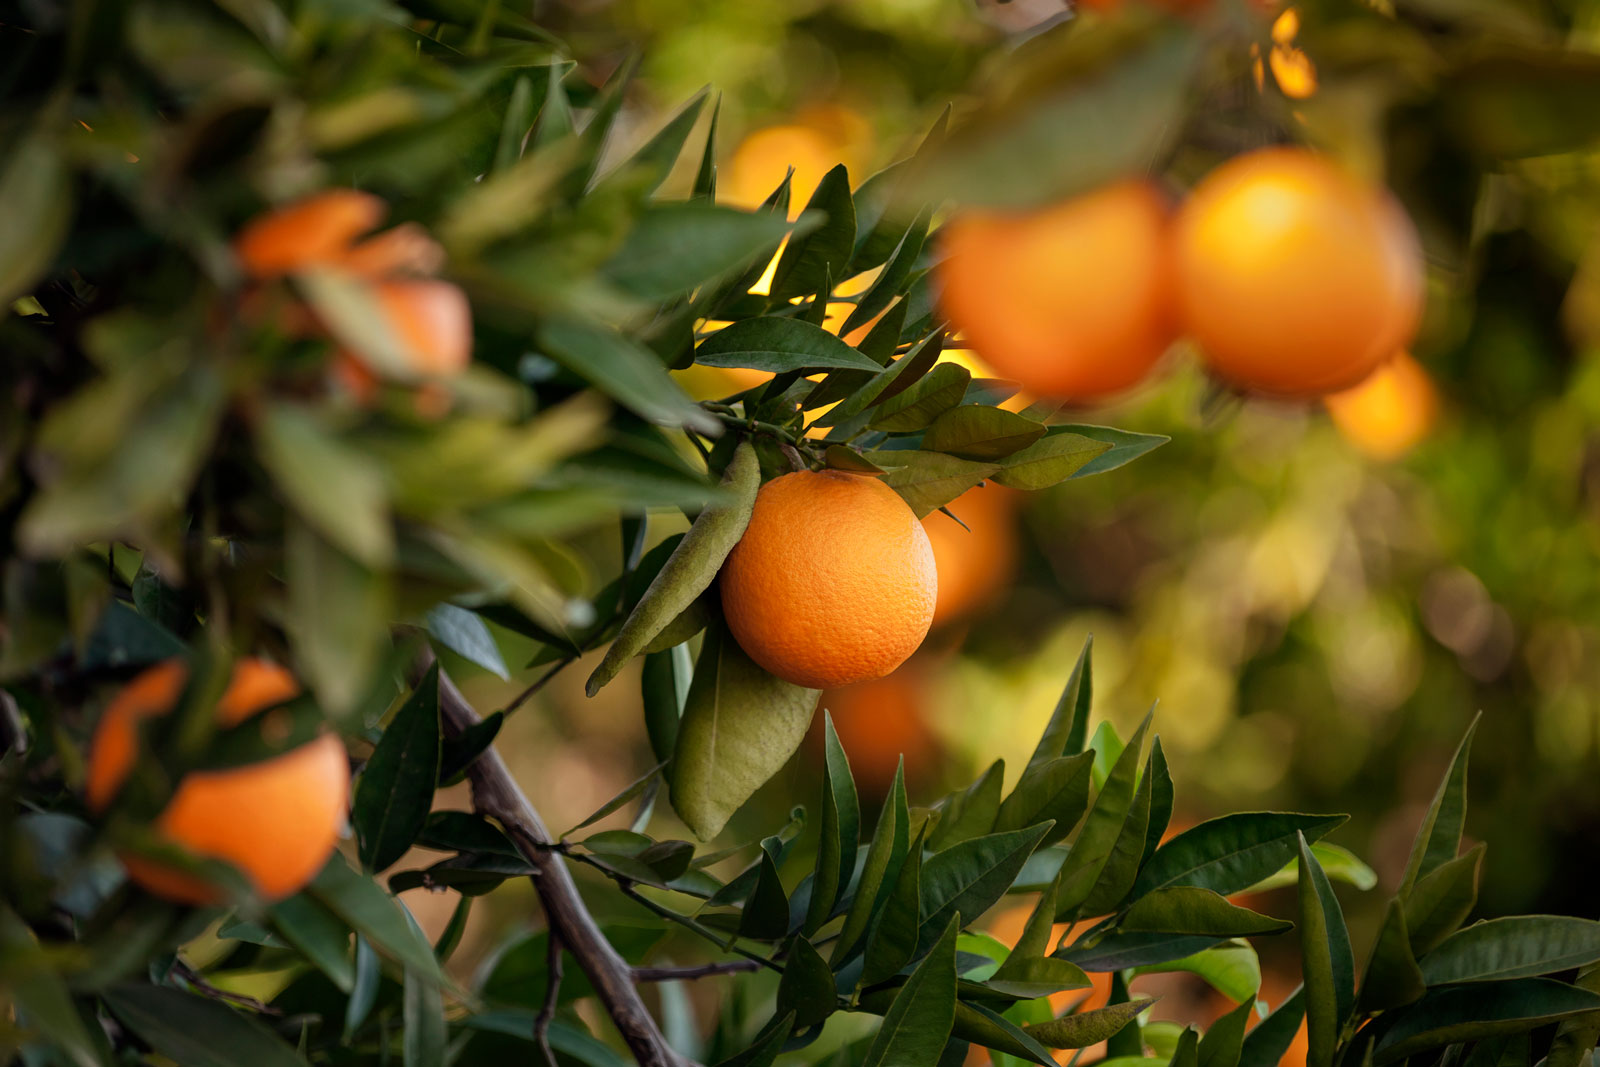 Orange trees treated with Maxstim biostimulants produce sweeter fruit